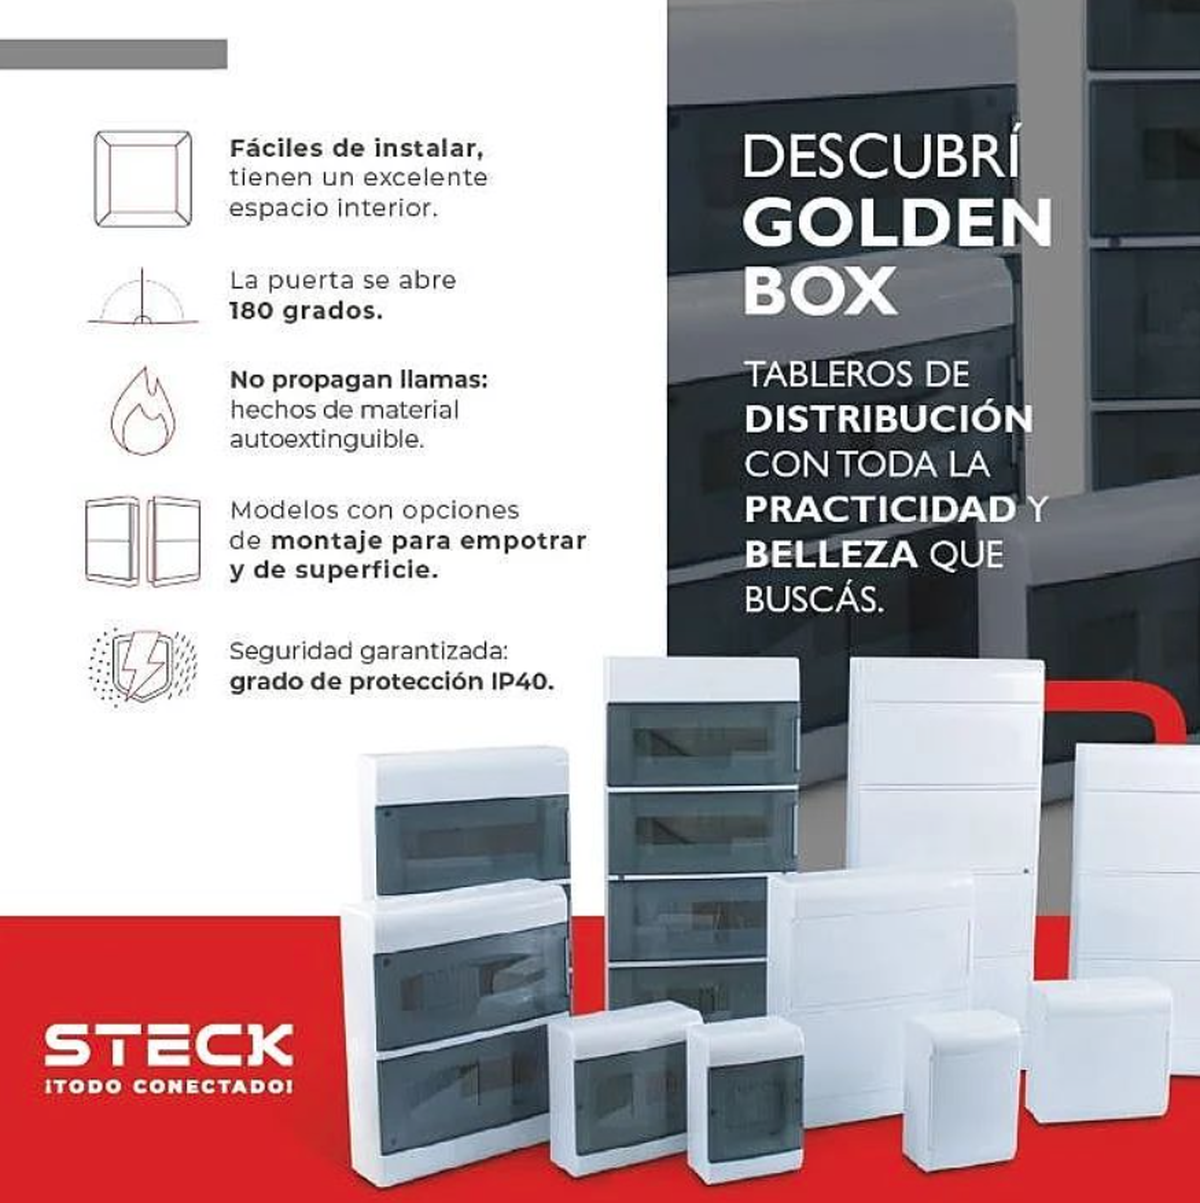 Steck presenta Golden Box